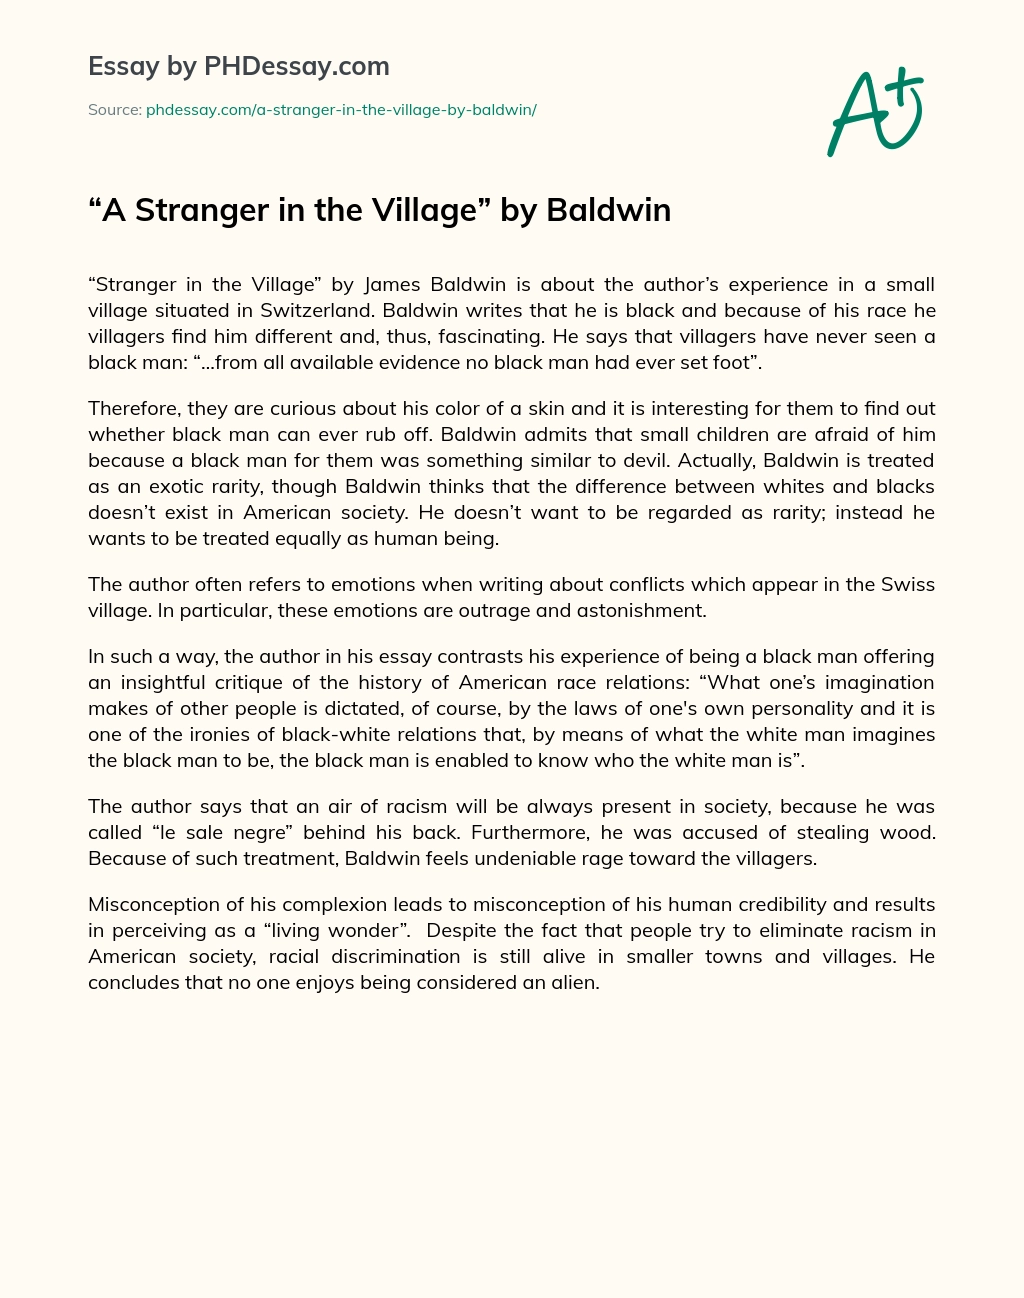 A Stranger in the Village by Baldwin essay